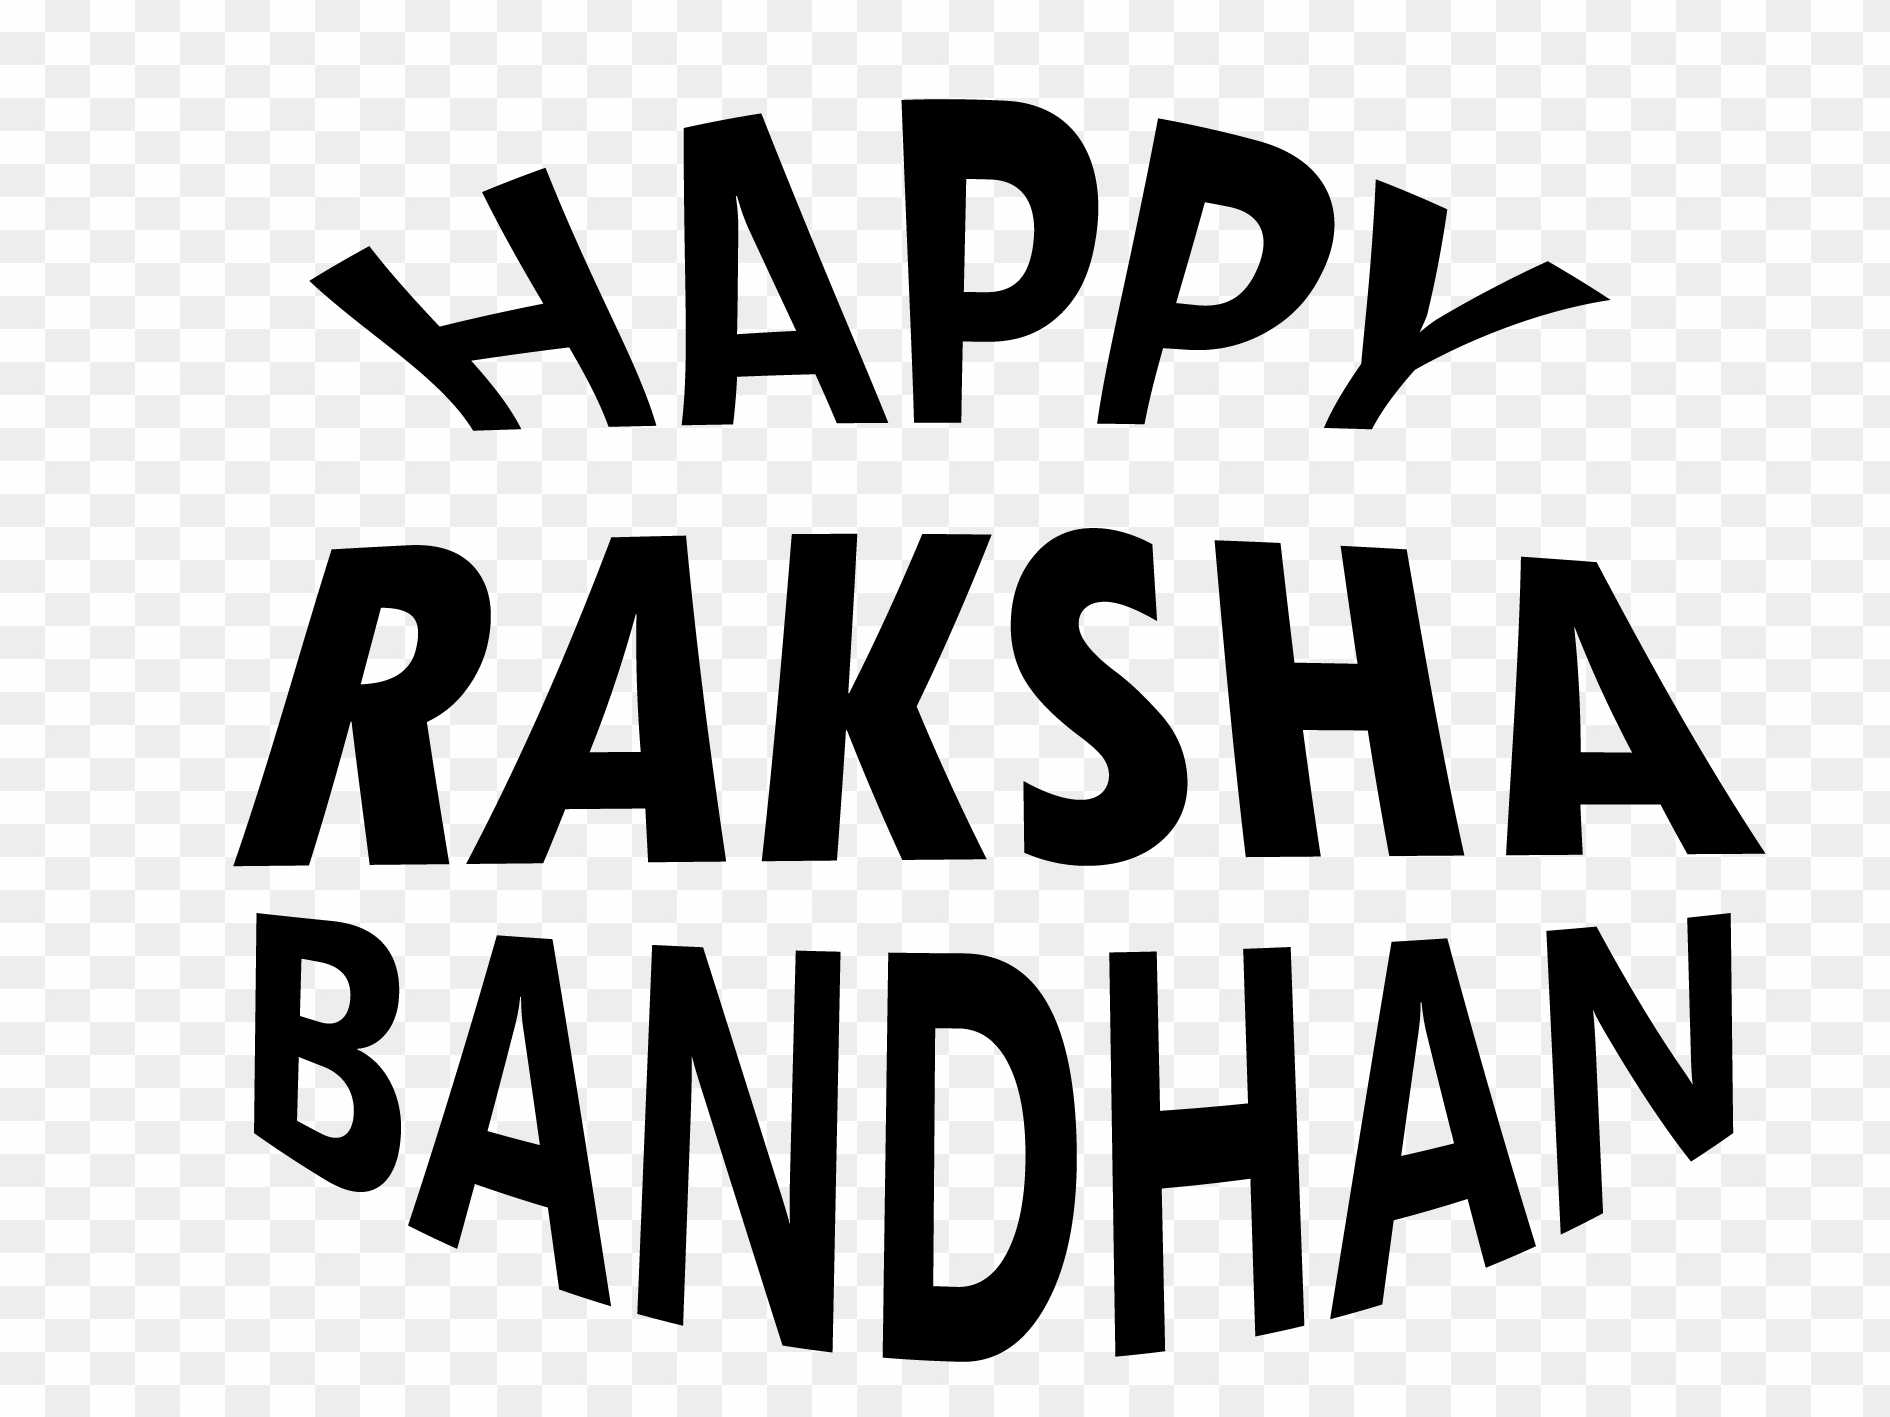 Happy Raksha Bandhan Text Png transparent image download 